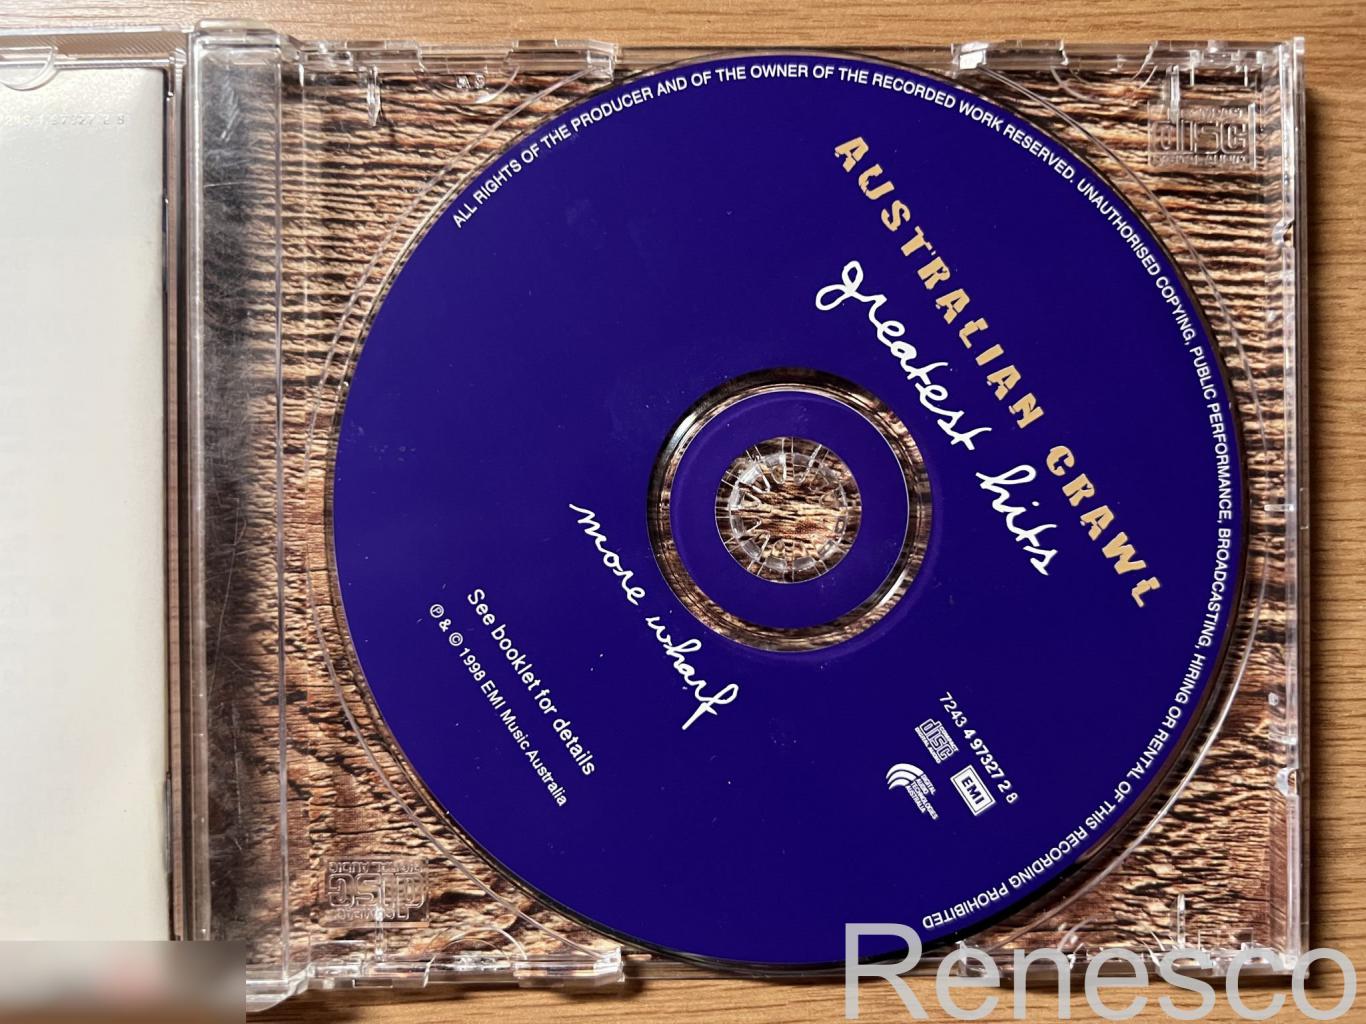 Australian Crawl – Greatest Hits (More Wharf) (Australia) (1998) 4